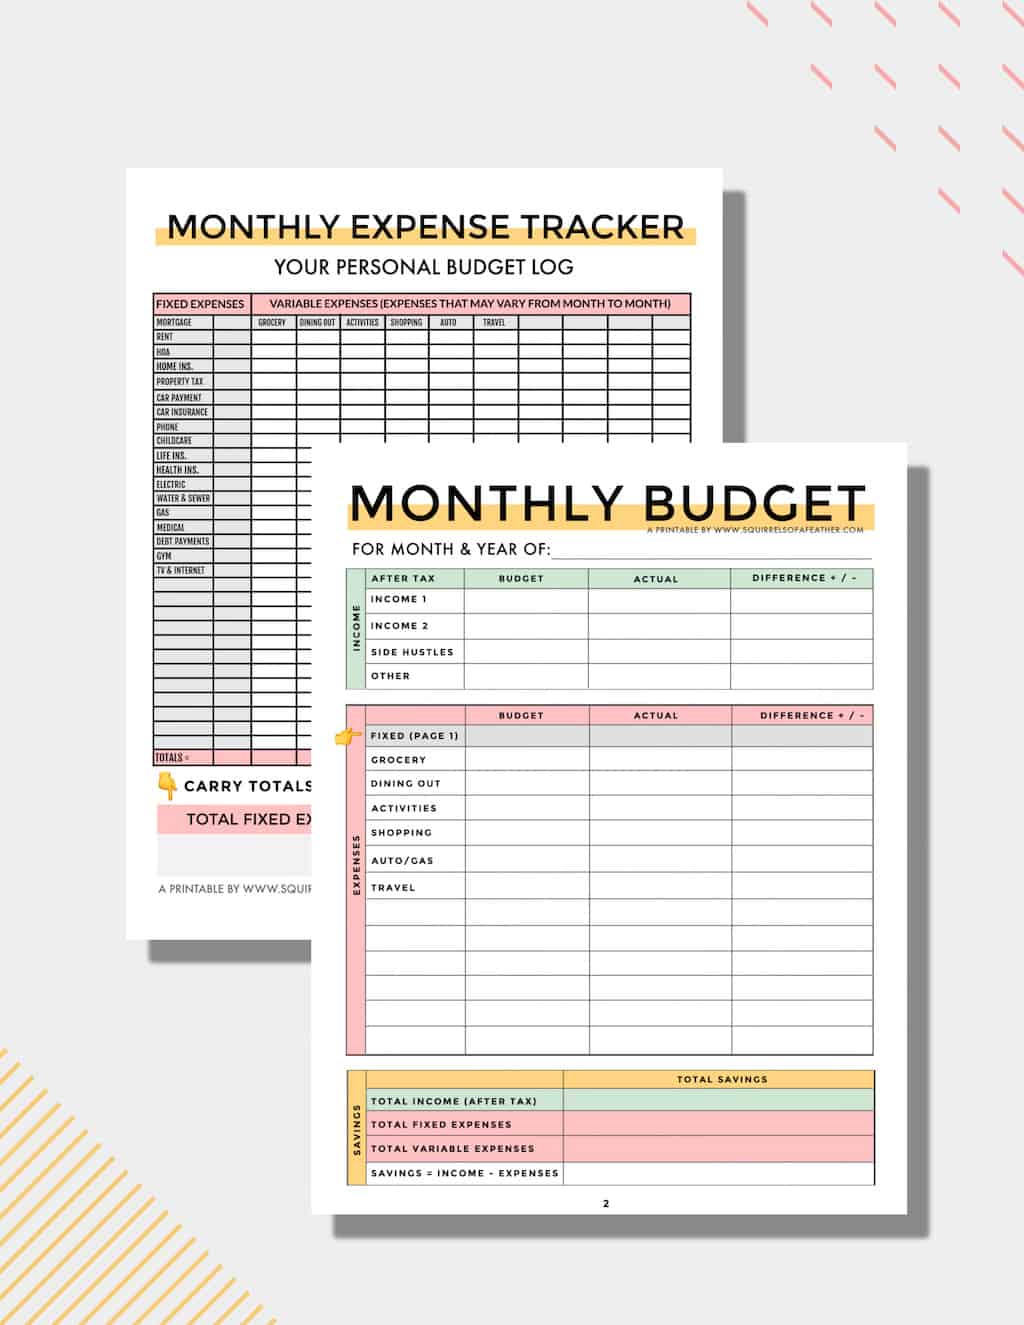 Paper Paper Party Supplies Finance Tracker Digital Printable Planner Budget Planner Digital 